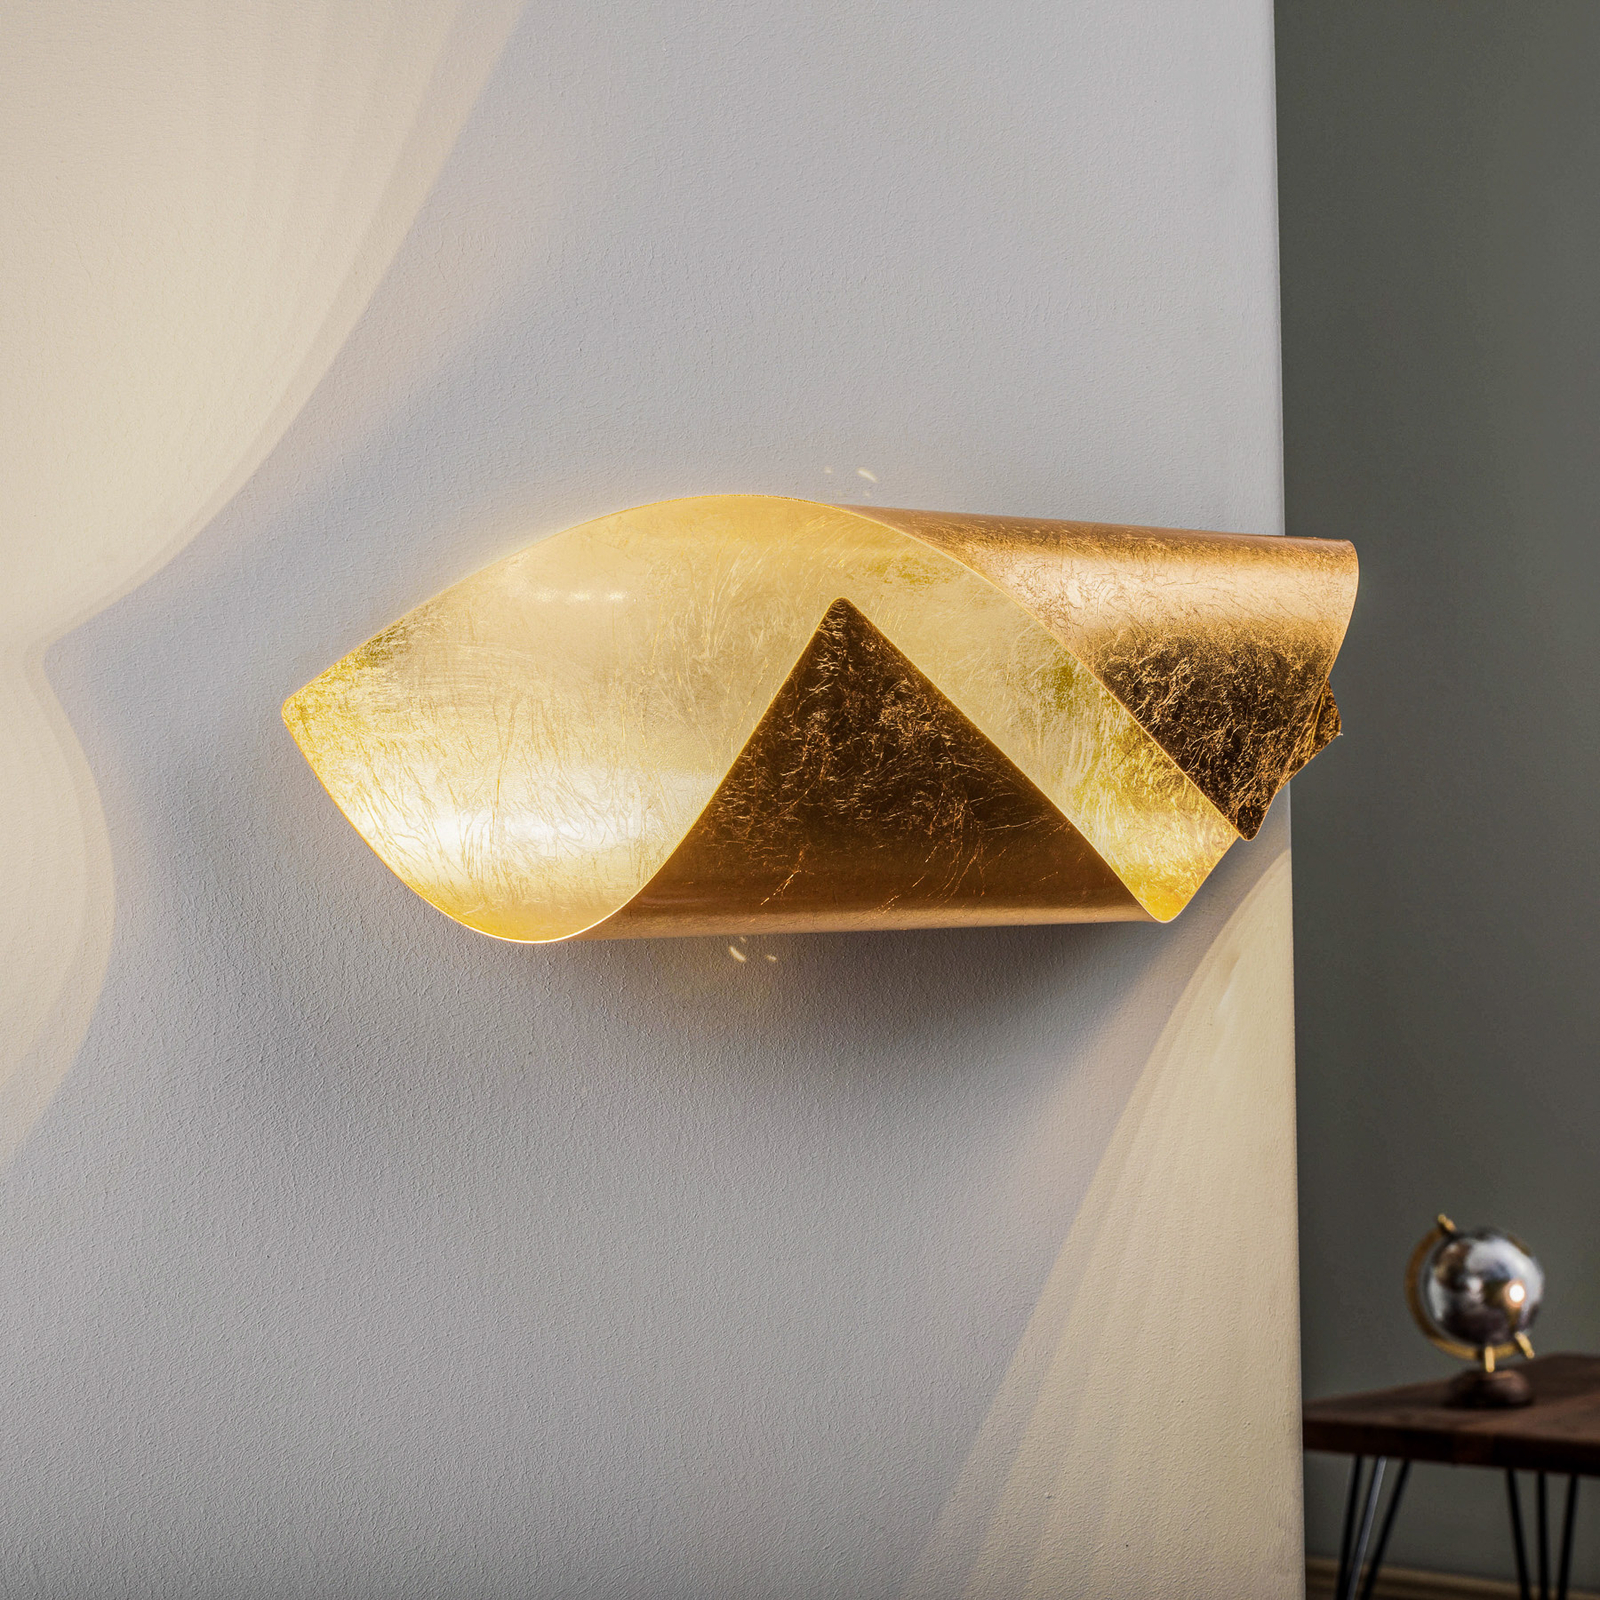 Lindby Wrenjo LED-vägglampa, guld, 45 cm